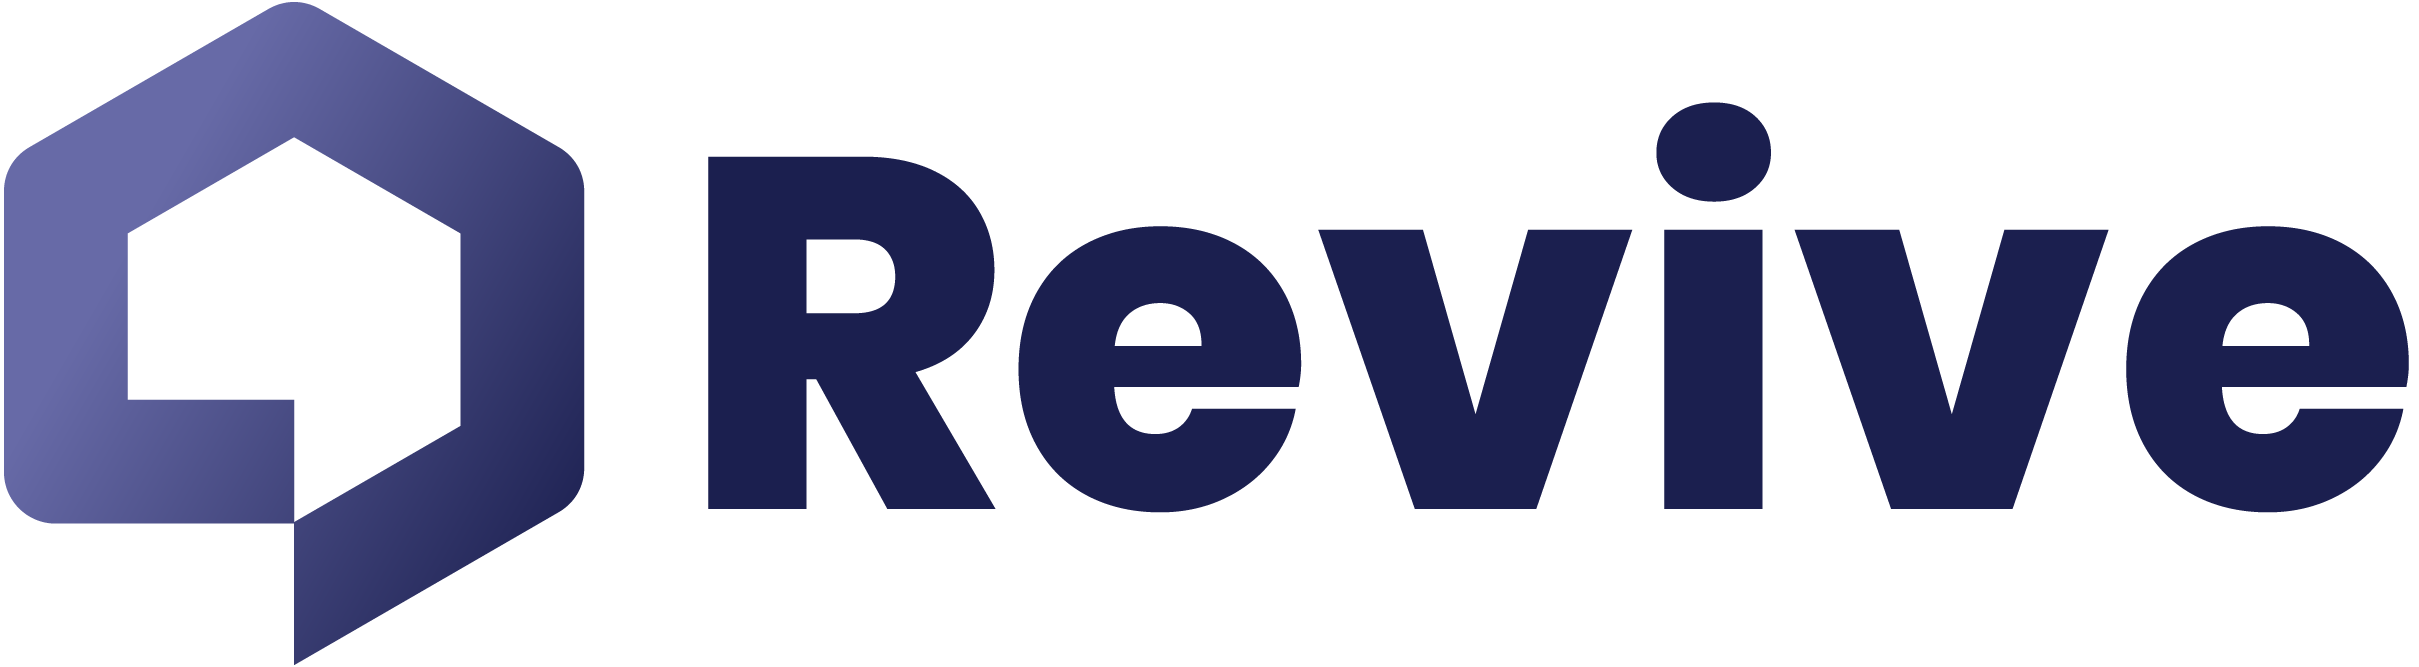 Revival_Logo